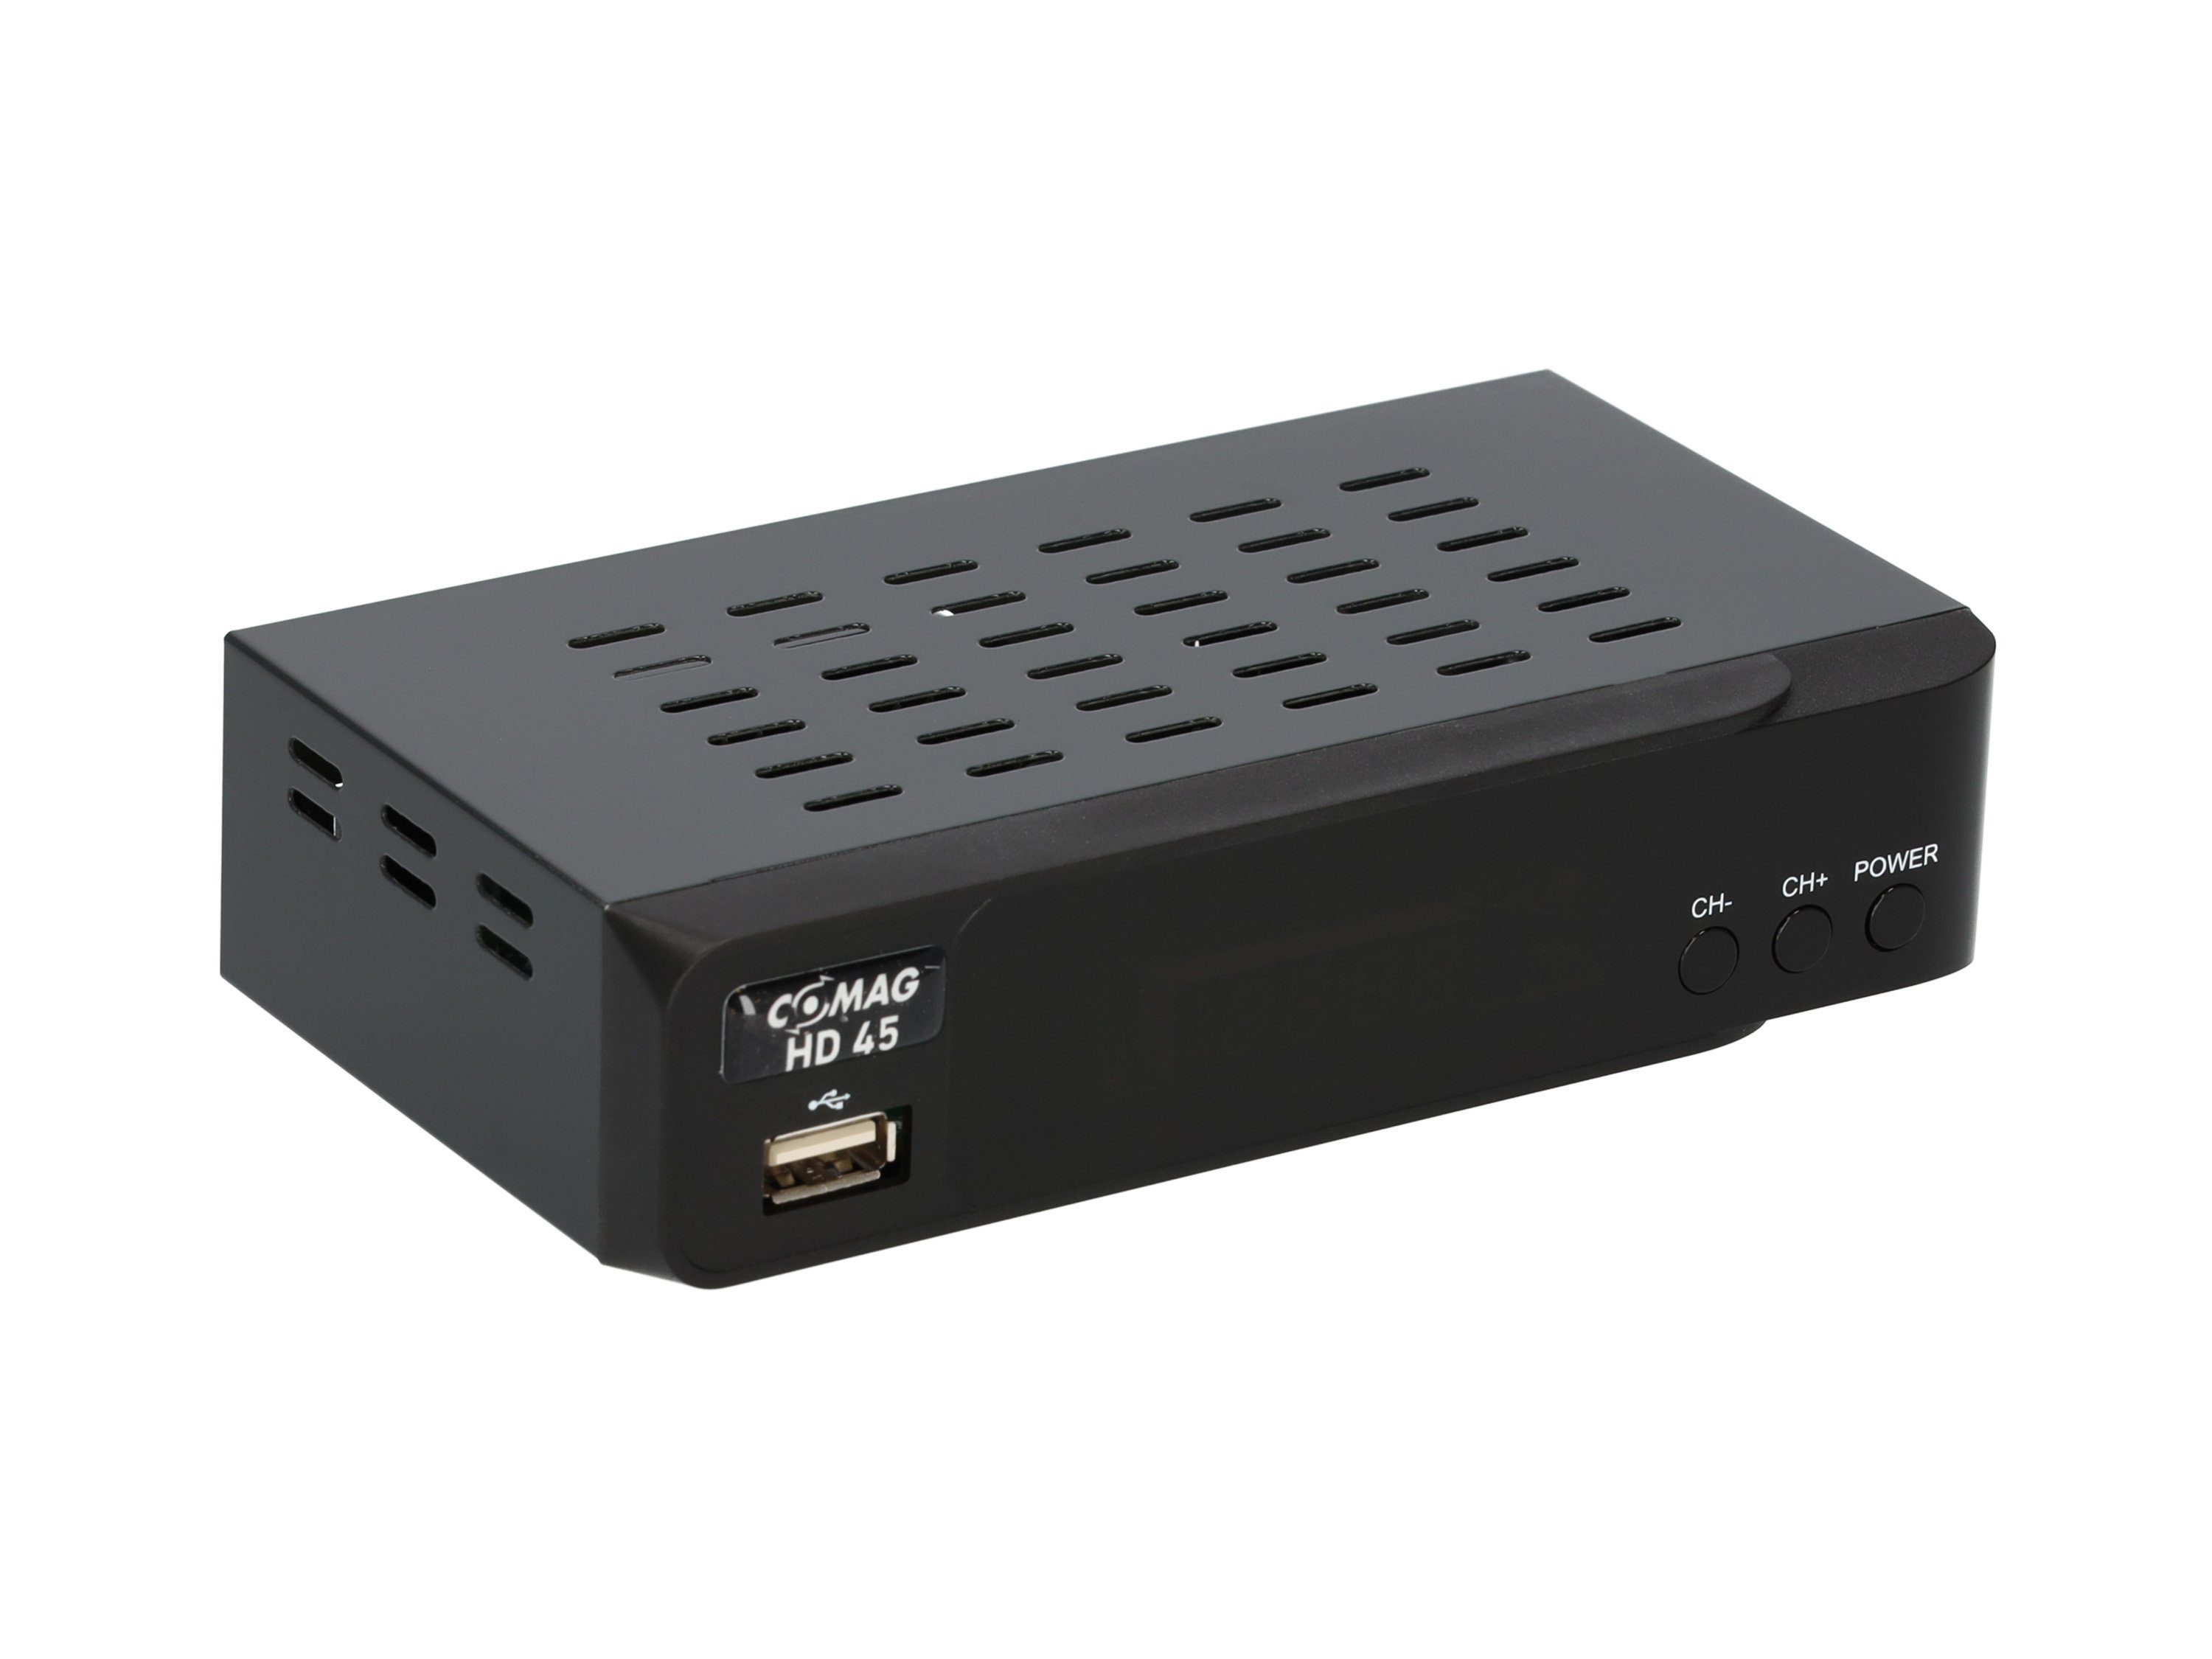 1080p HDMI, Comag Full Scart (USB, DVB-S2 HDTV DVB-S2) HD45, SAT-Receiver